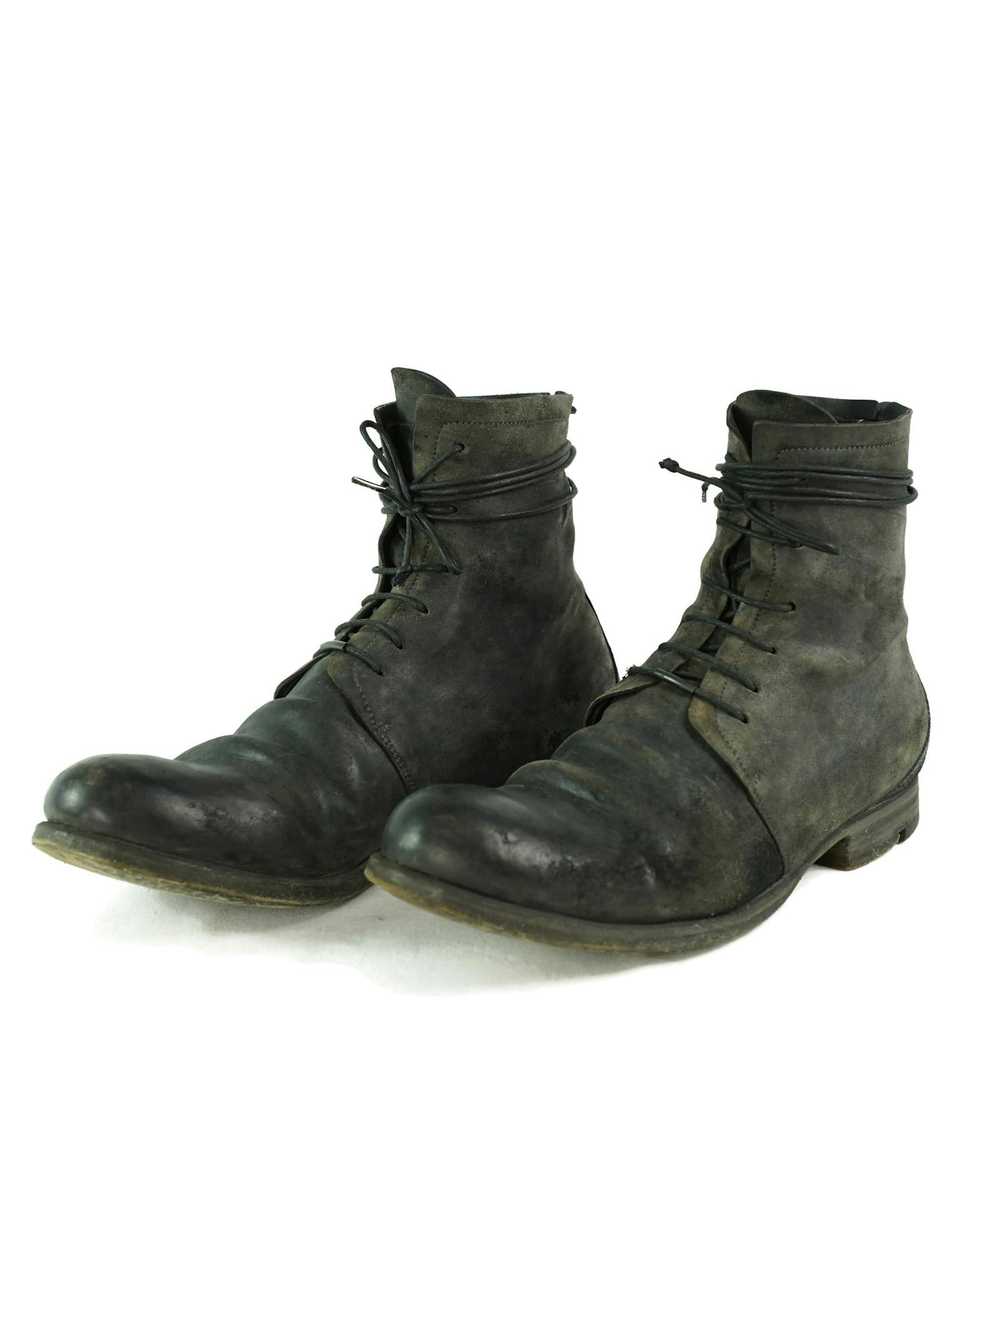 Layer-0 Cordovan Reverse Dark Grey Leather Boots - image 7